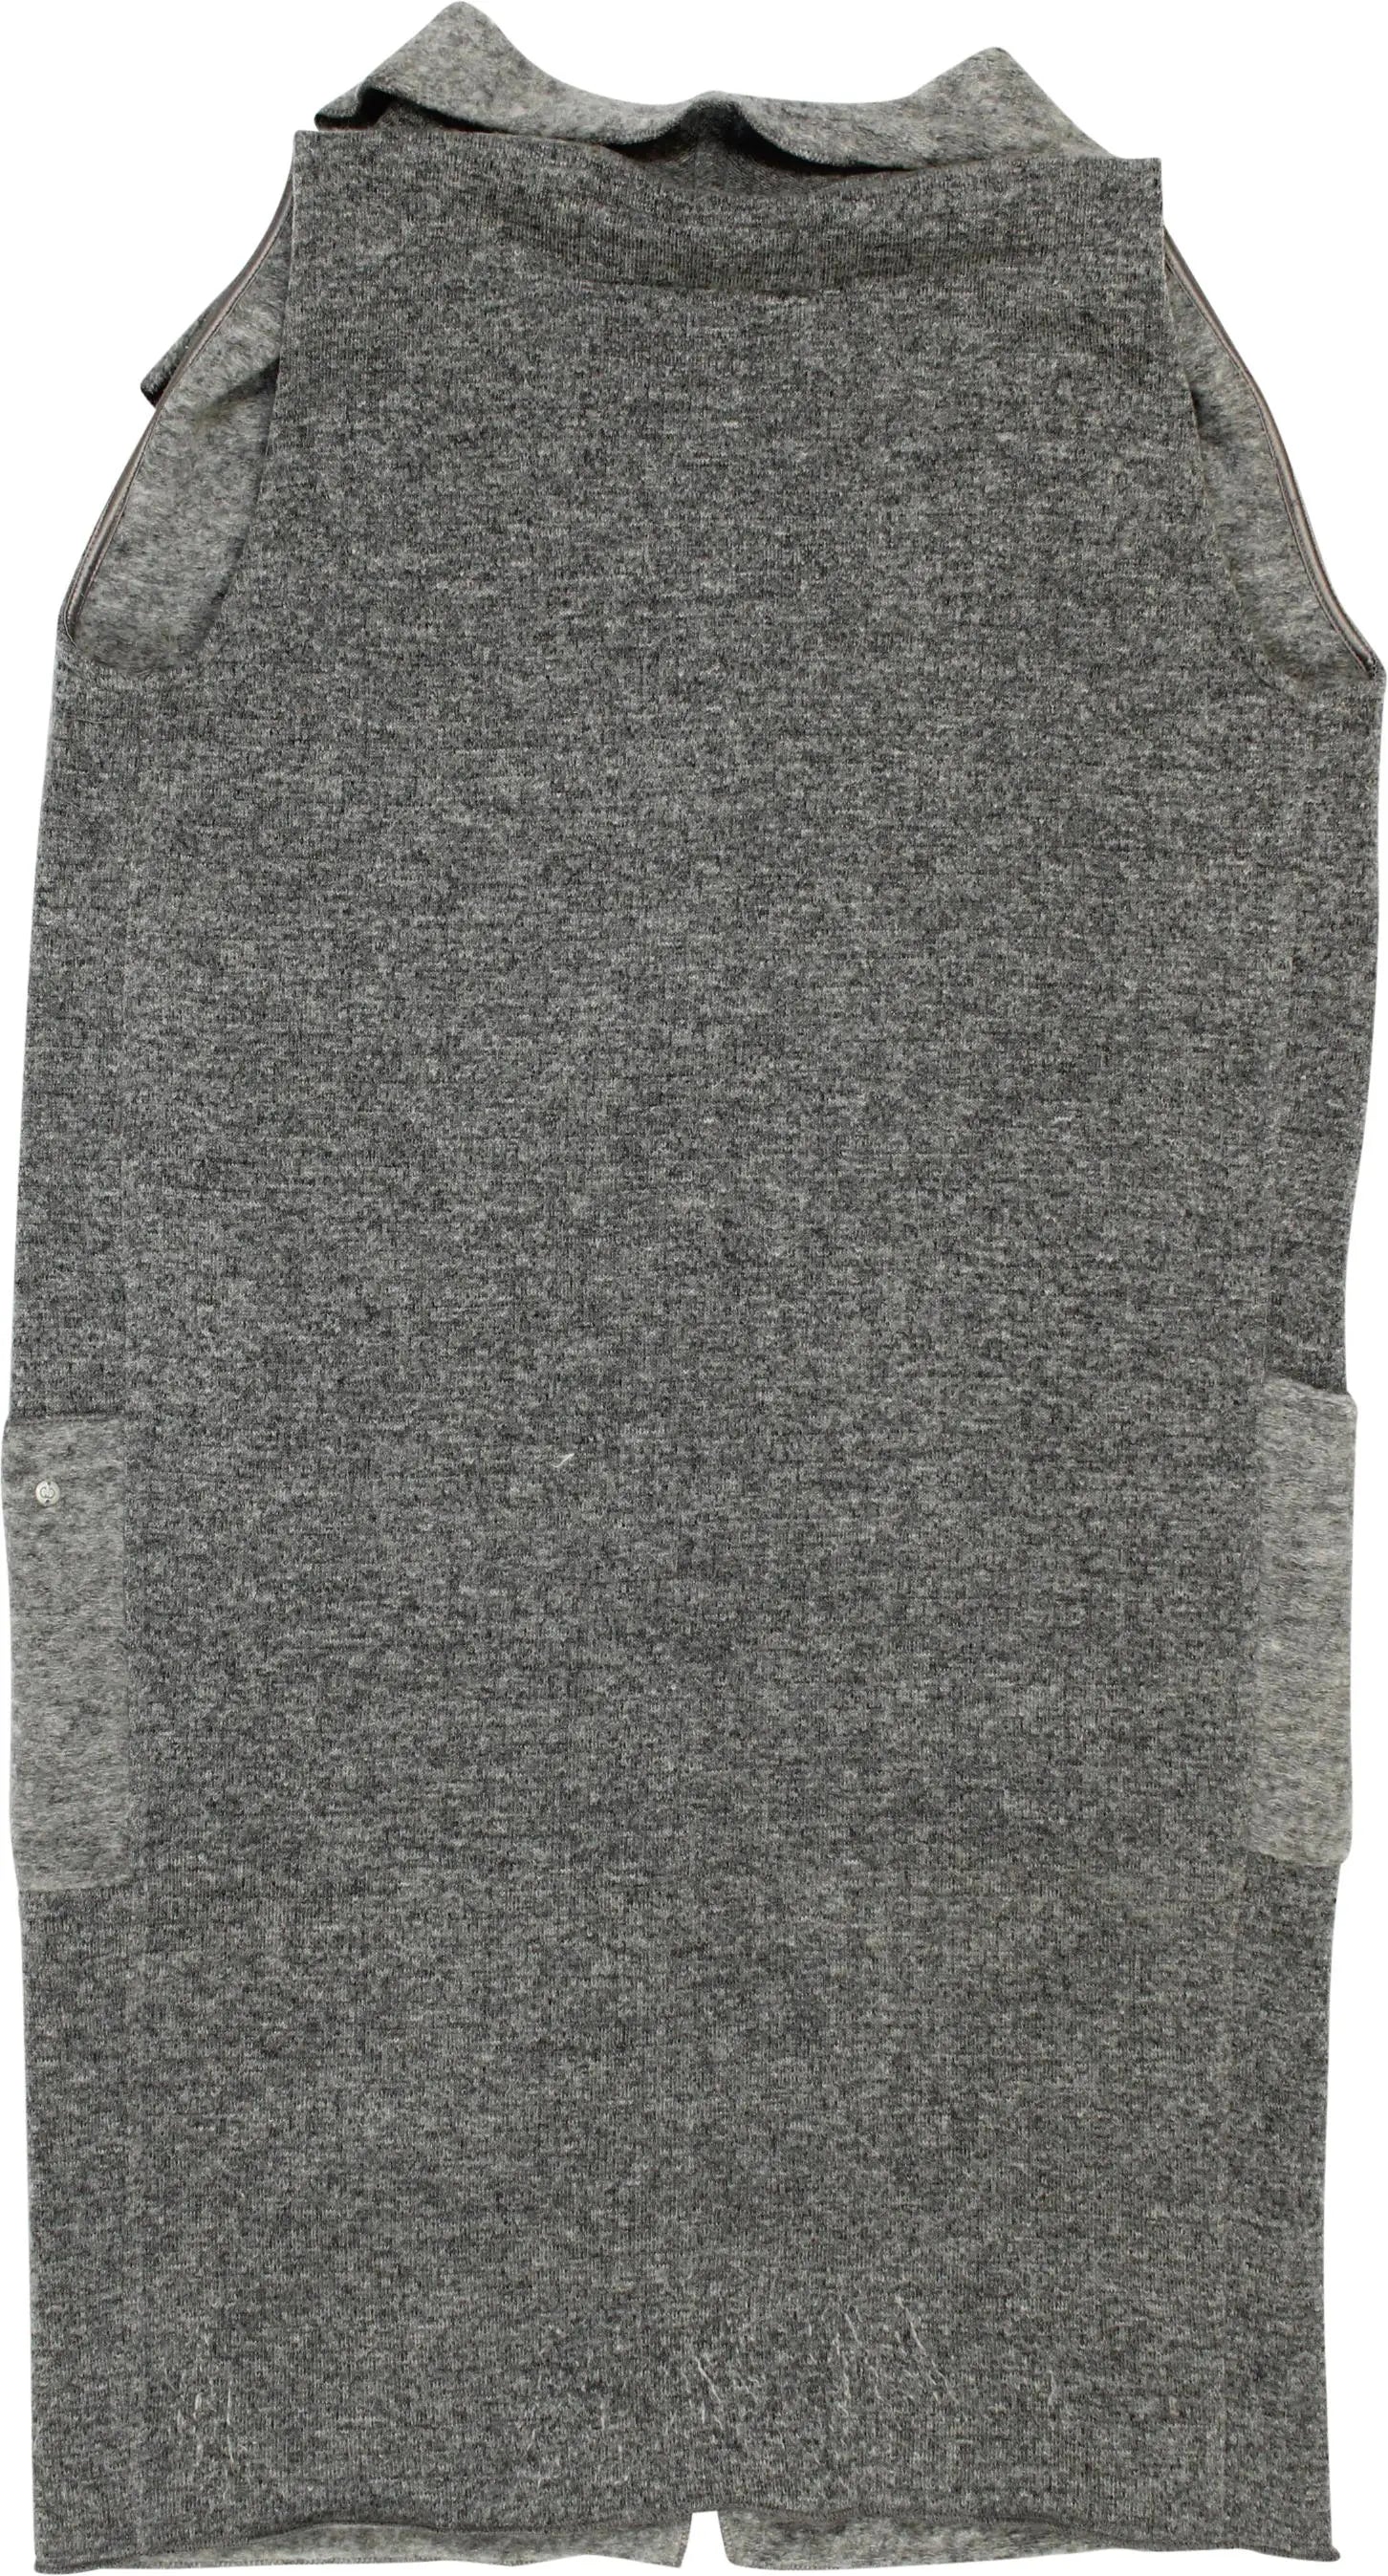 Gerry Weber - Grey Plain Draped Vest- ThriftTale.com - Vintage and second handclothing